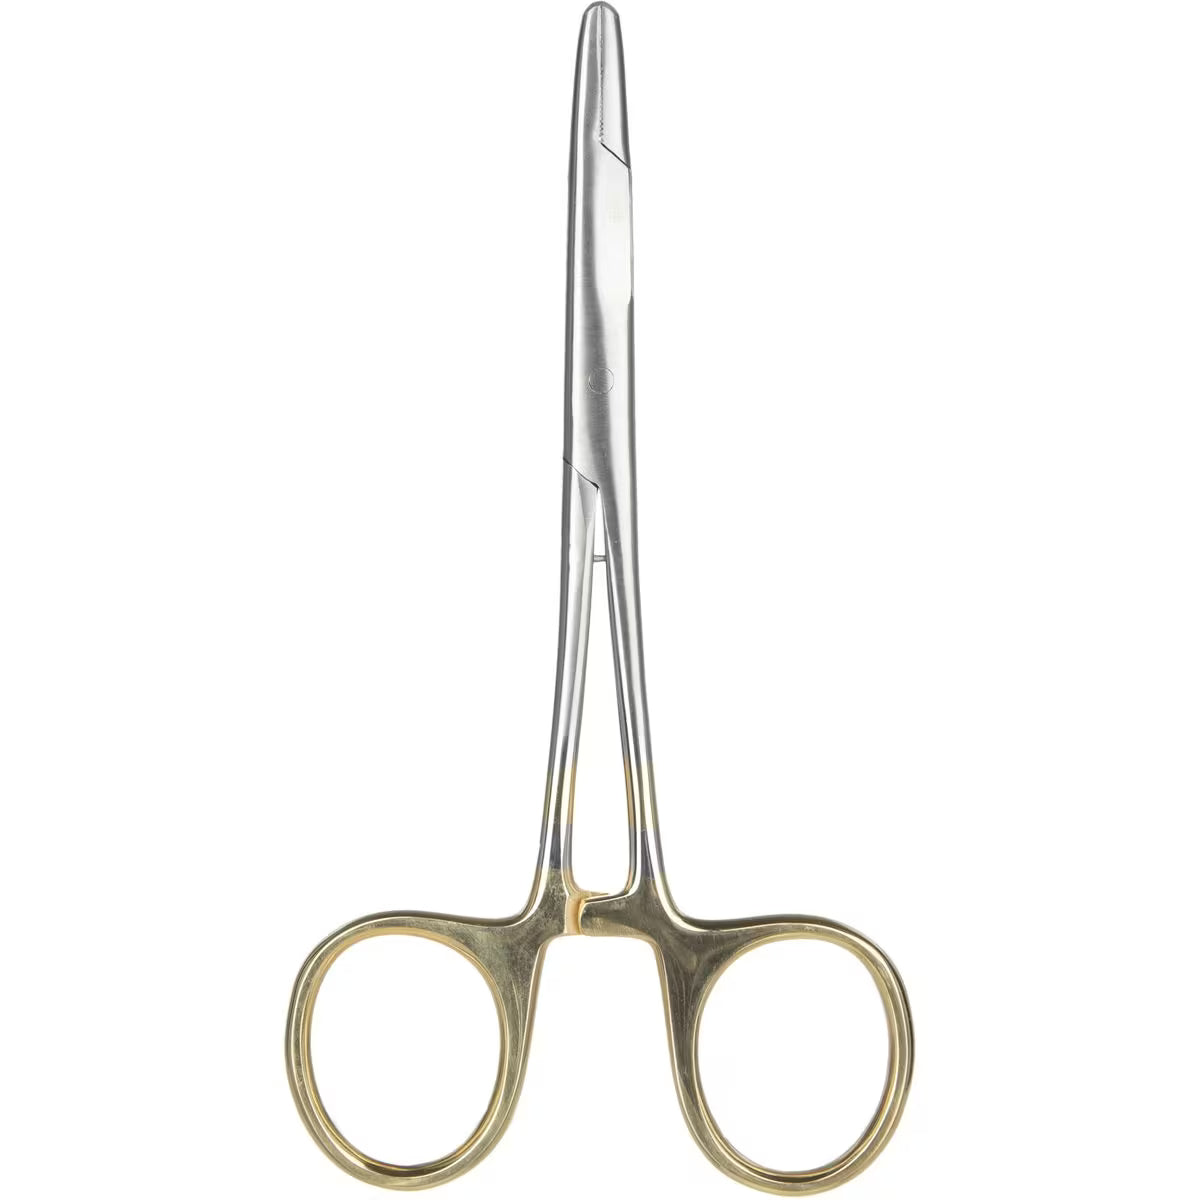 forceps scissors featured image